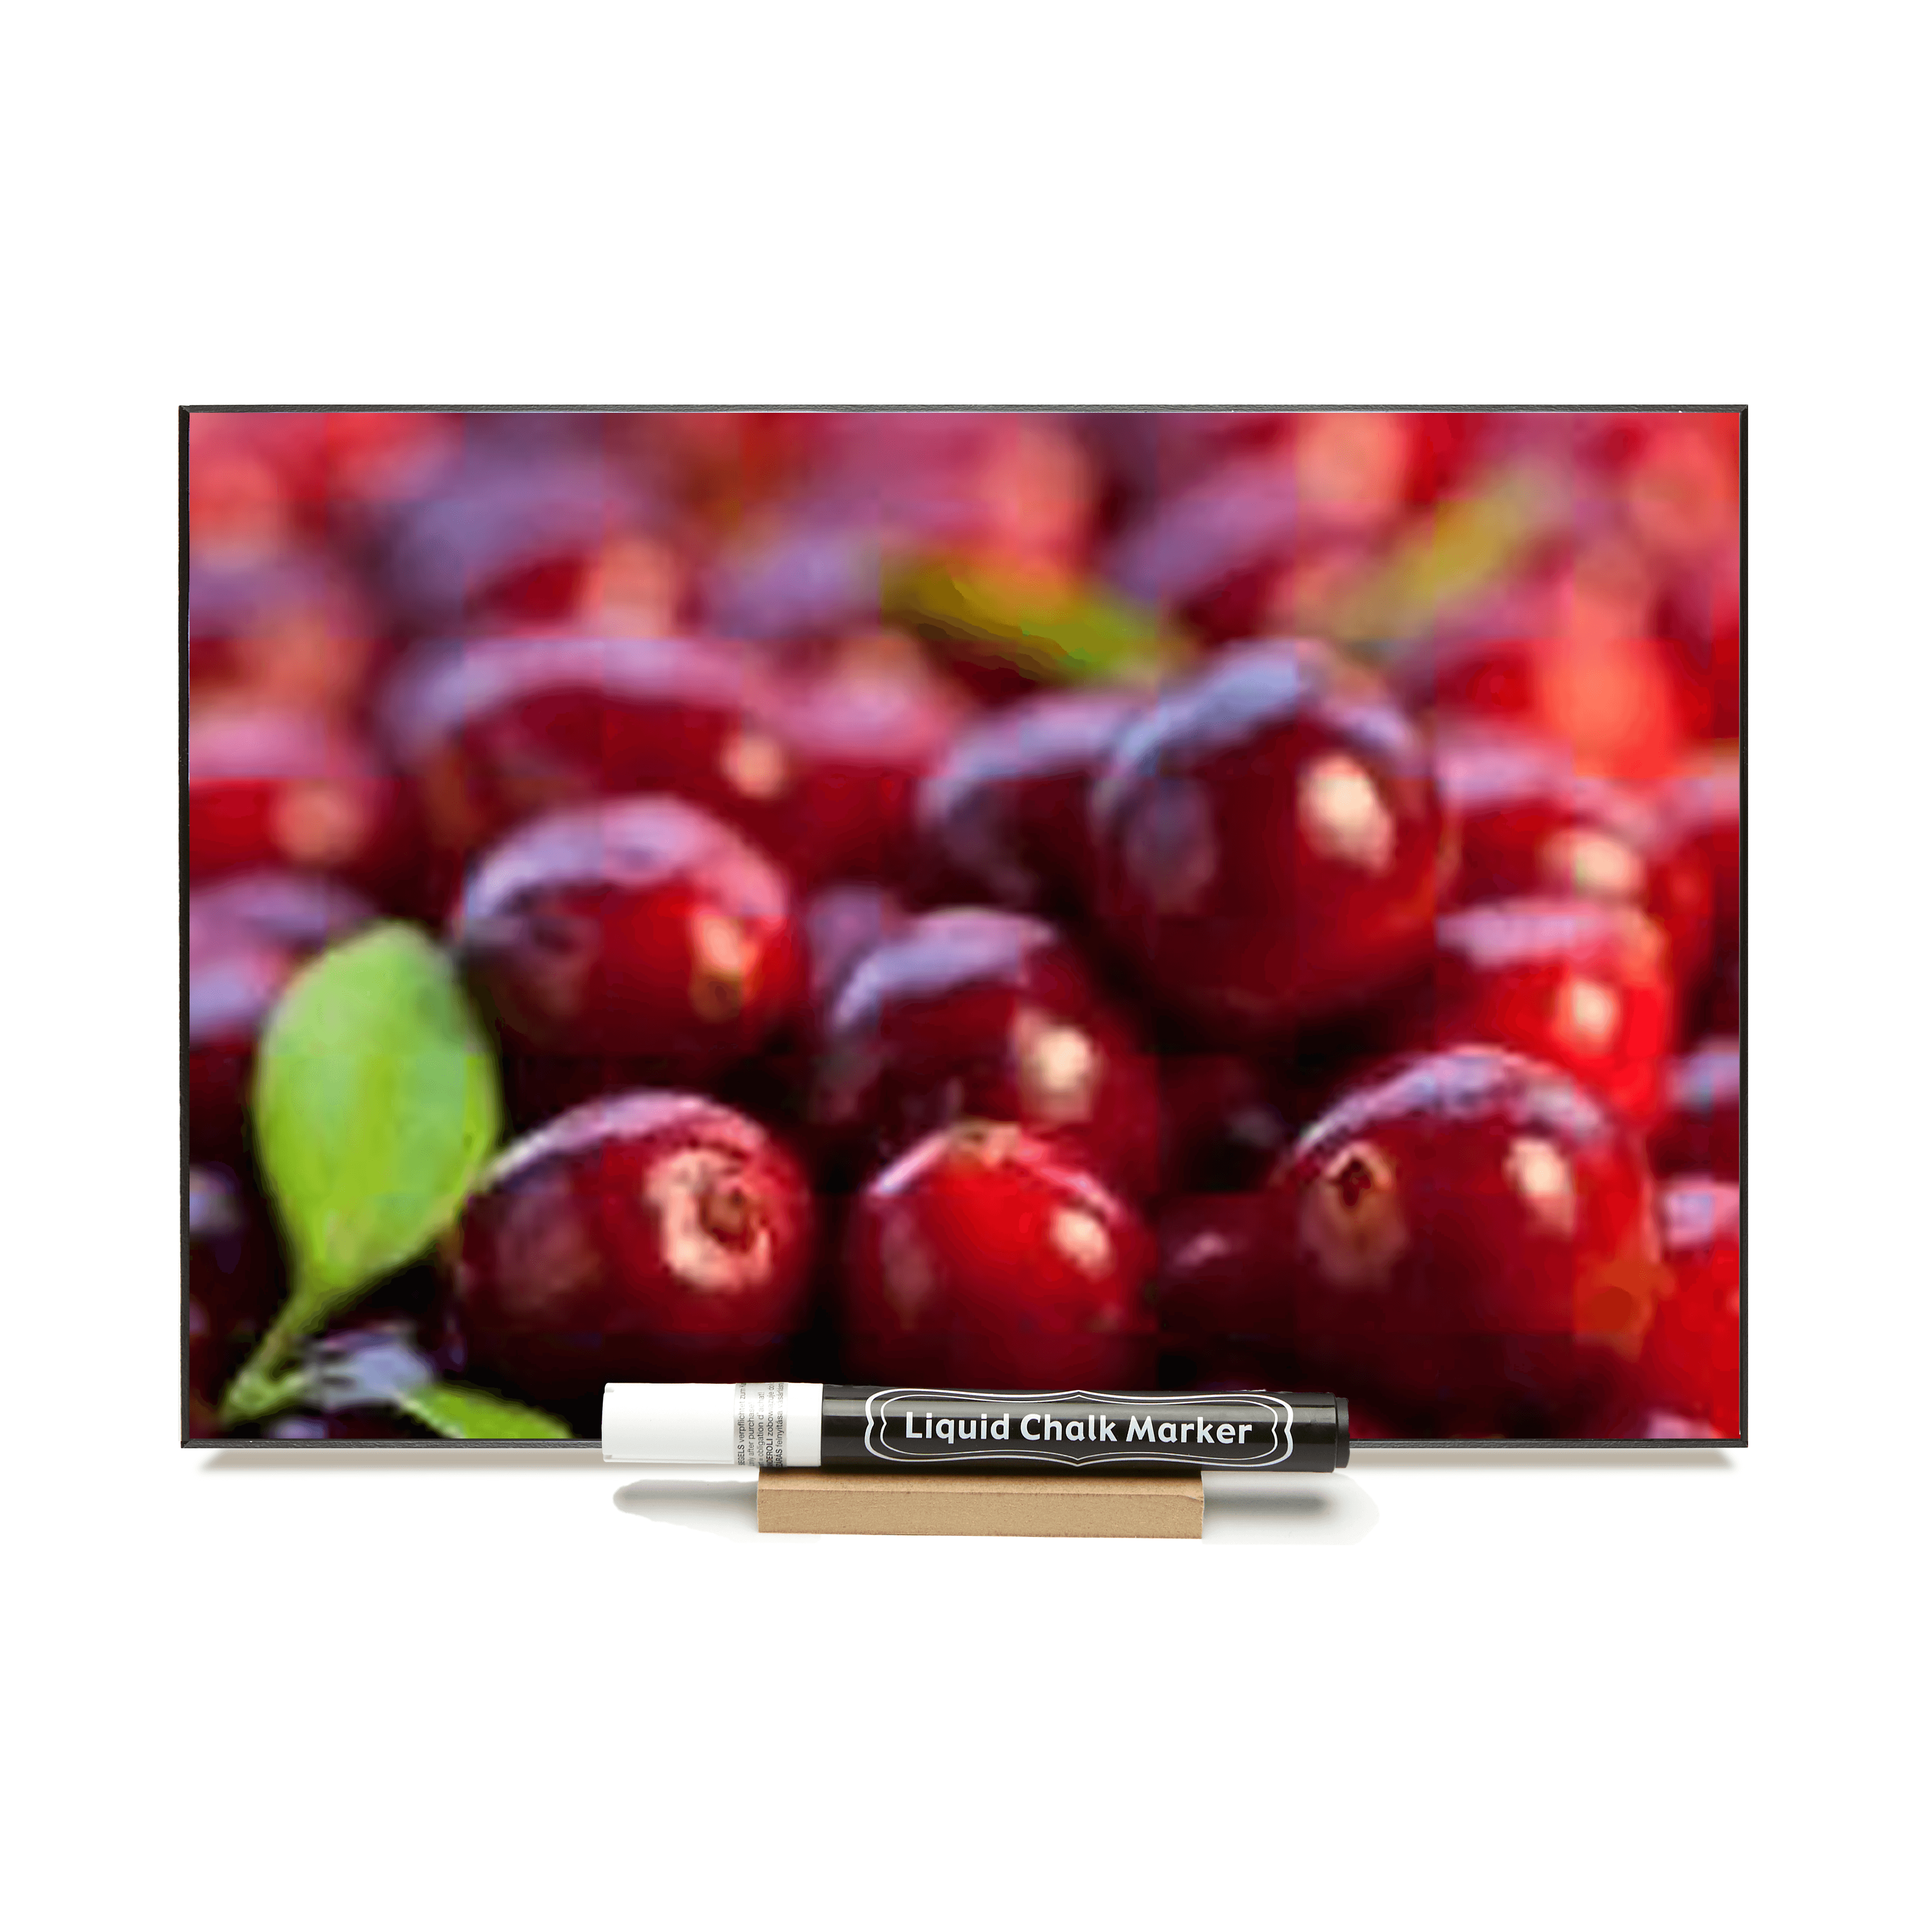 "Cranberries" PHOTO CHALKBOARD  Includes Chalkboard, Chalk Marker & Stand